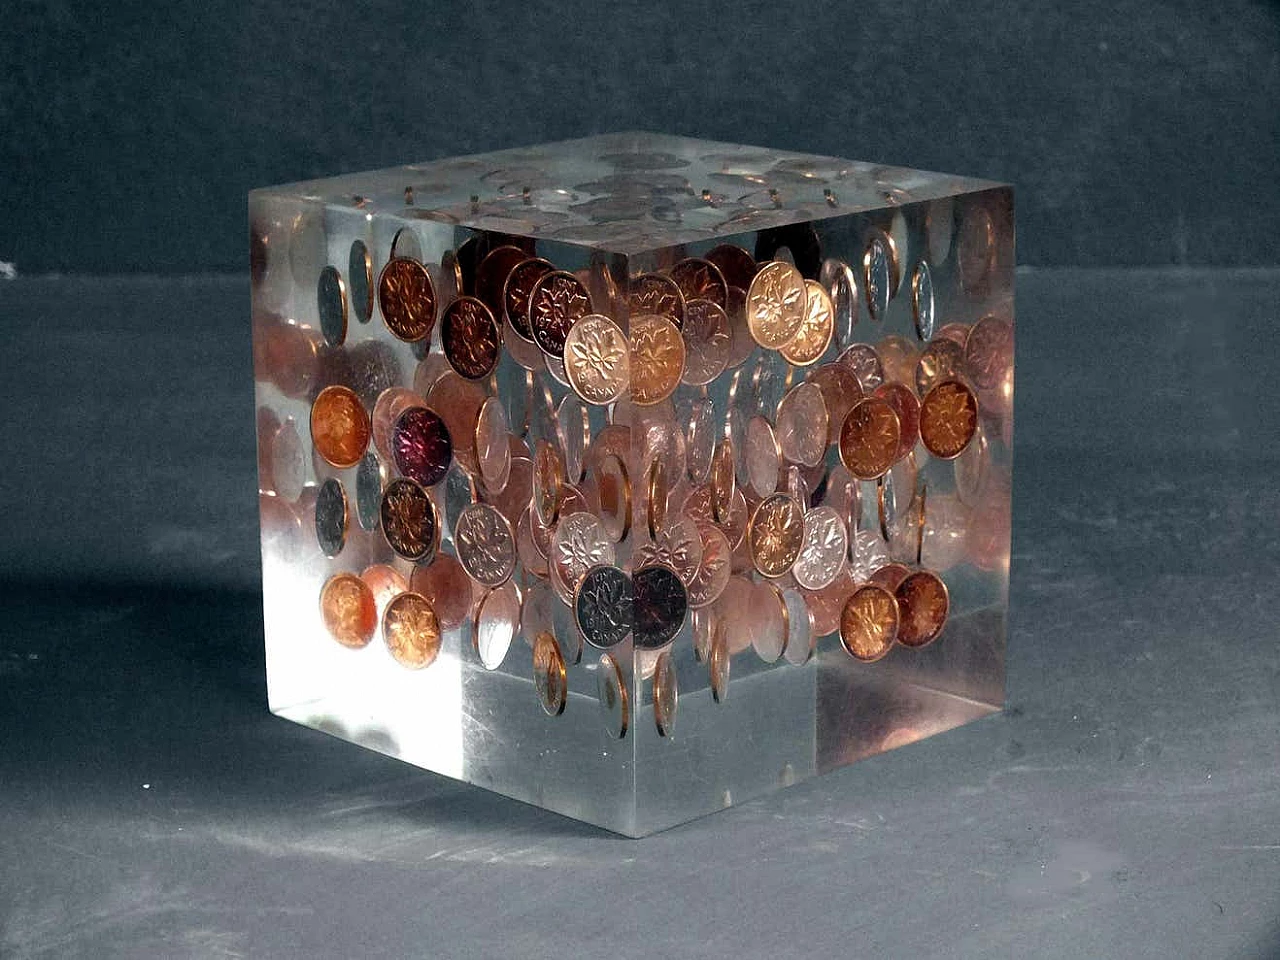 George Schreber, 1 cent, plexiglas and lucite cubic sculpture, 1974 3